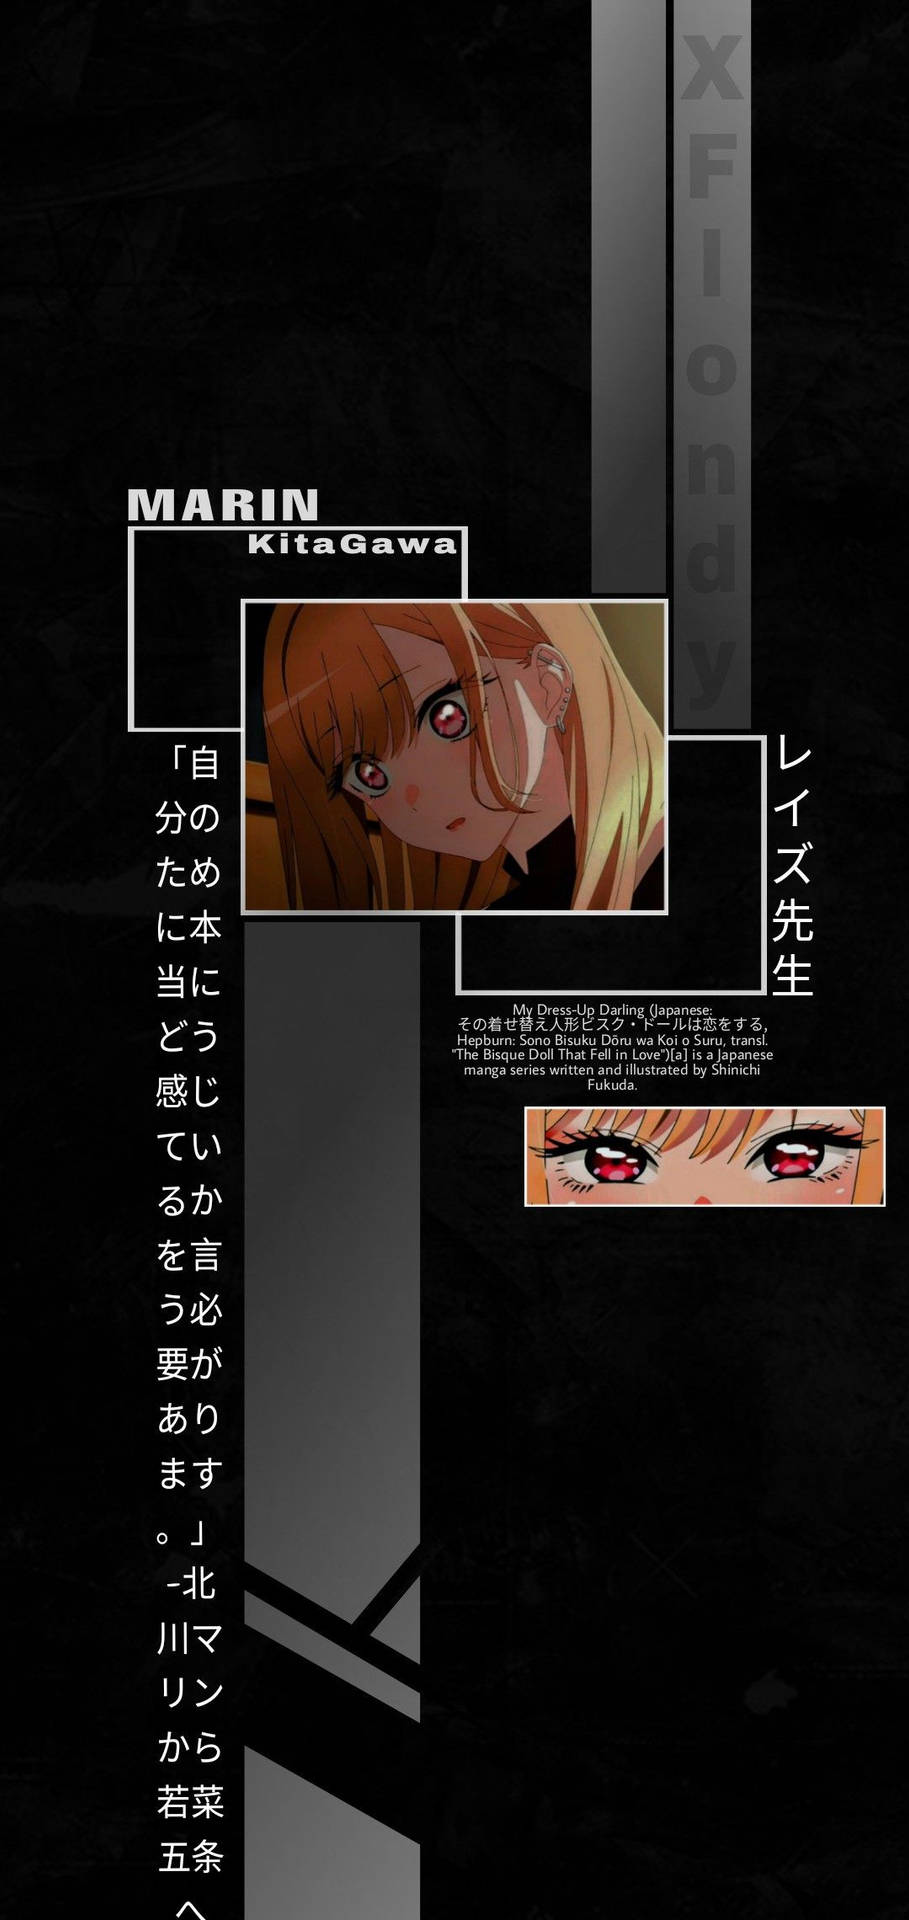 Black Aesthetic Anime Marin Kitagawa